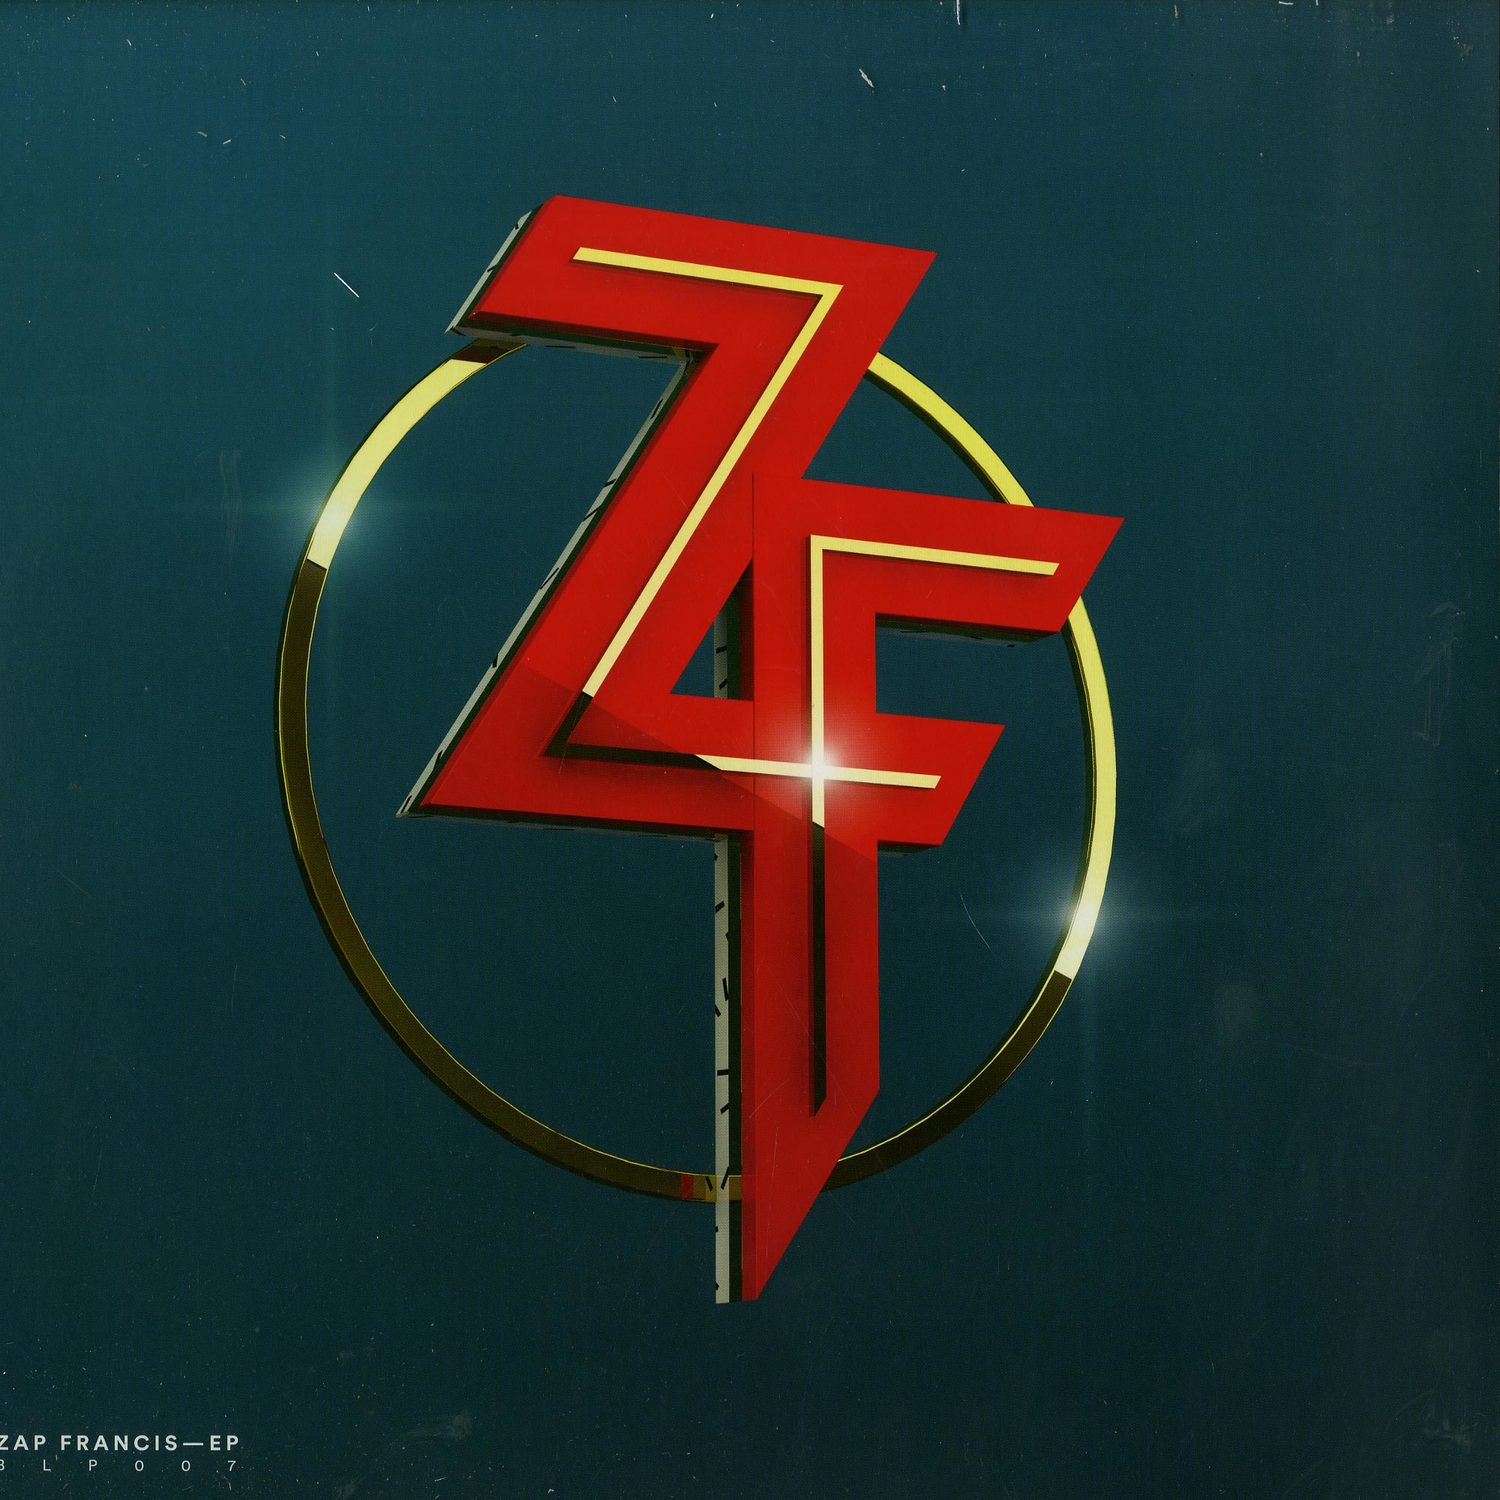 Zap Francis - ZAP FRANCIS EP